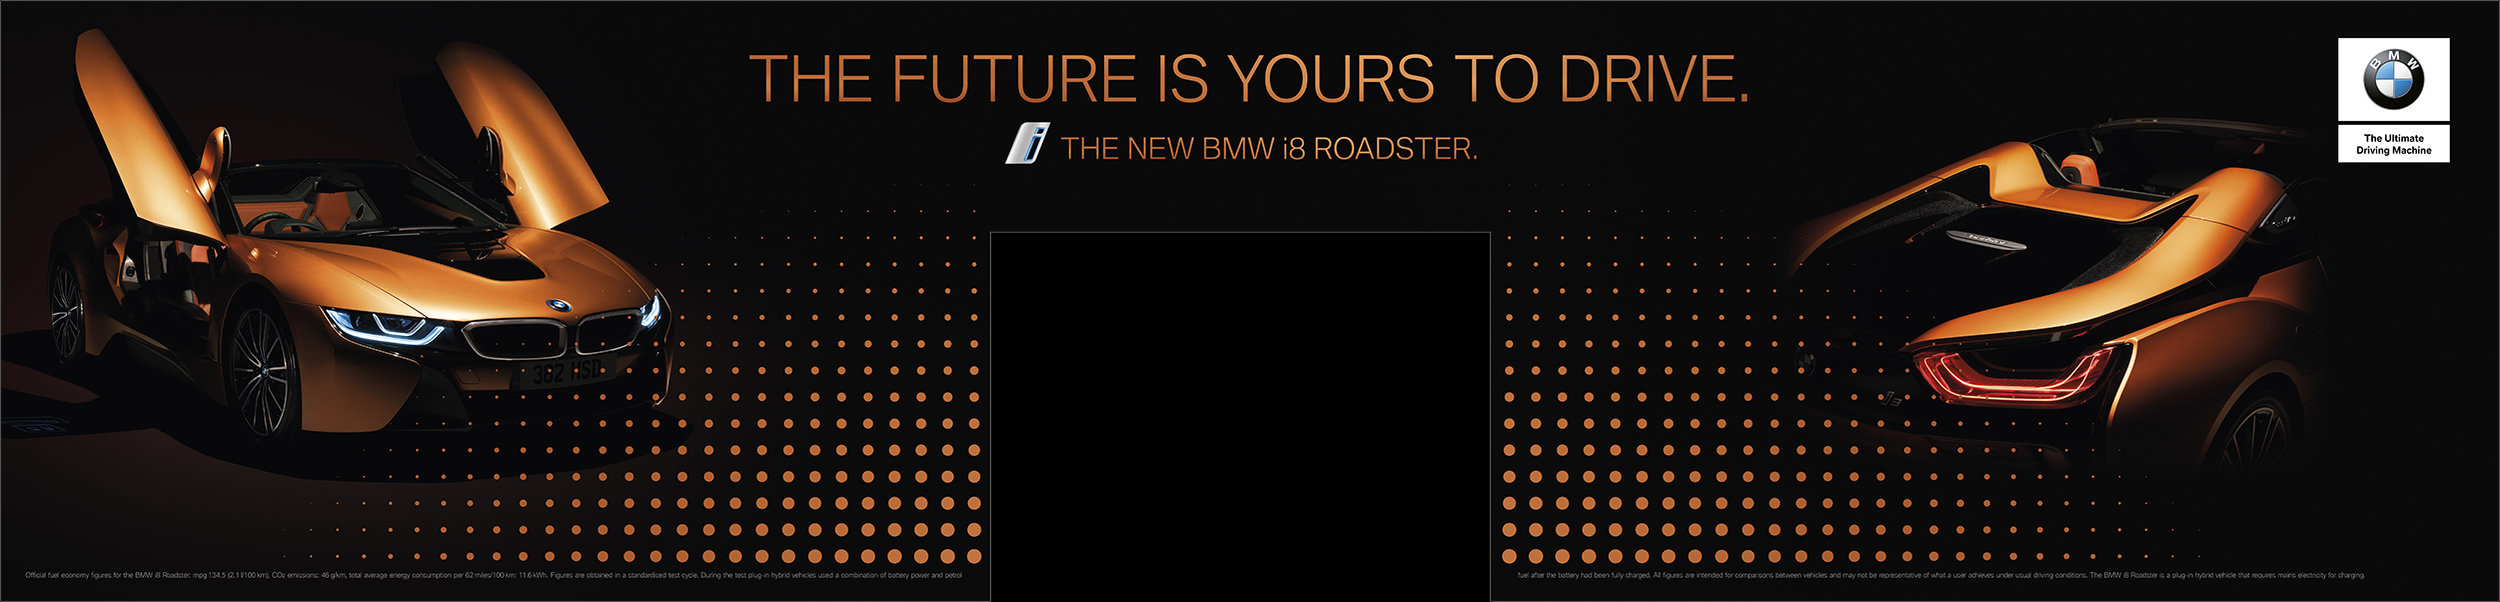 BMW i8 Roadster Heathrow Sofitel entrance advertising